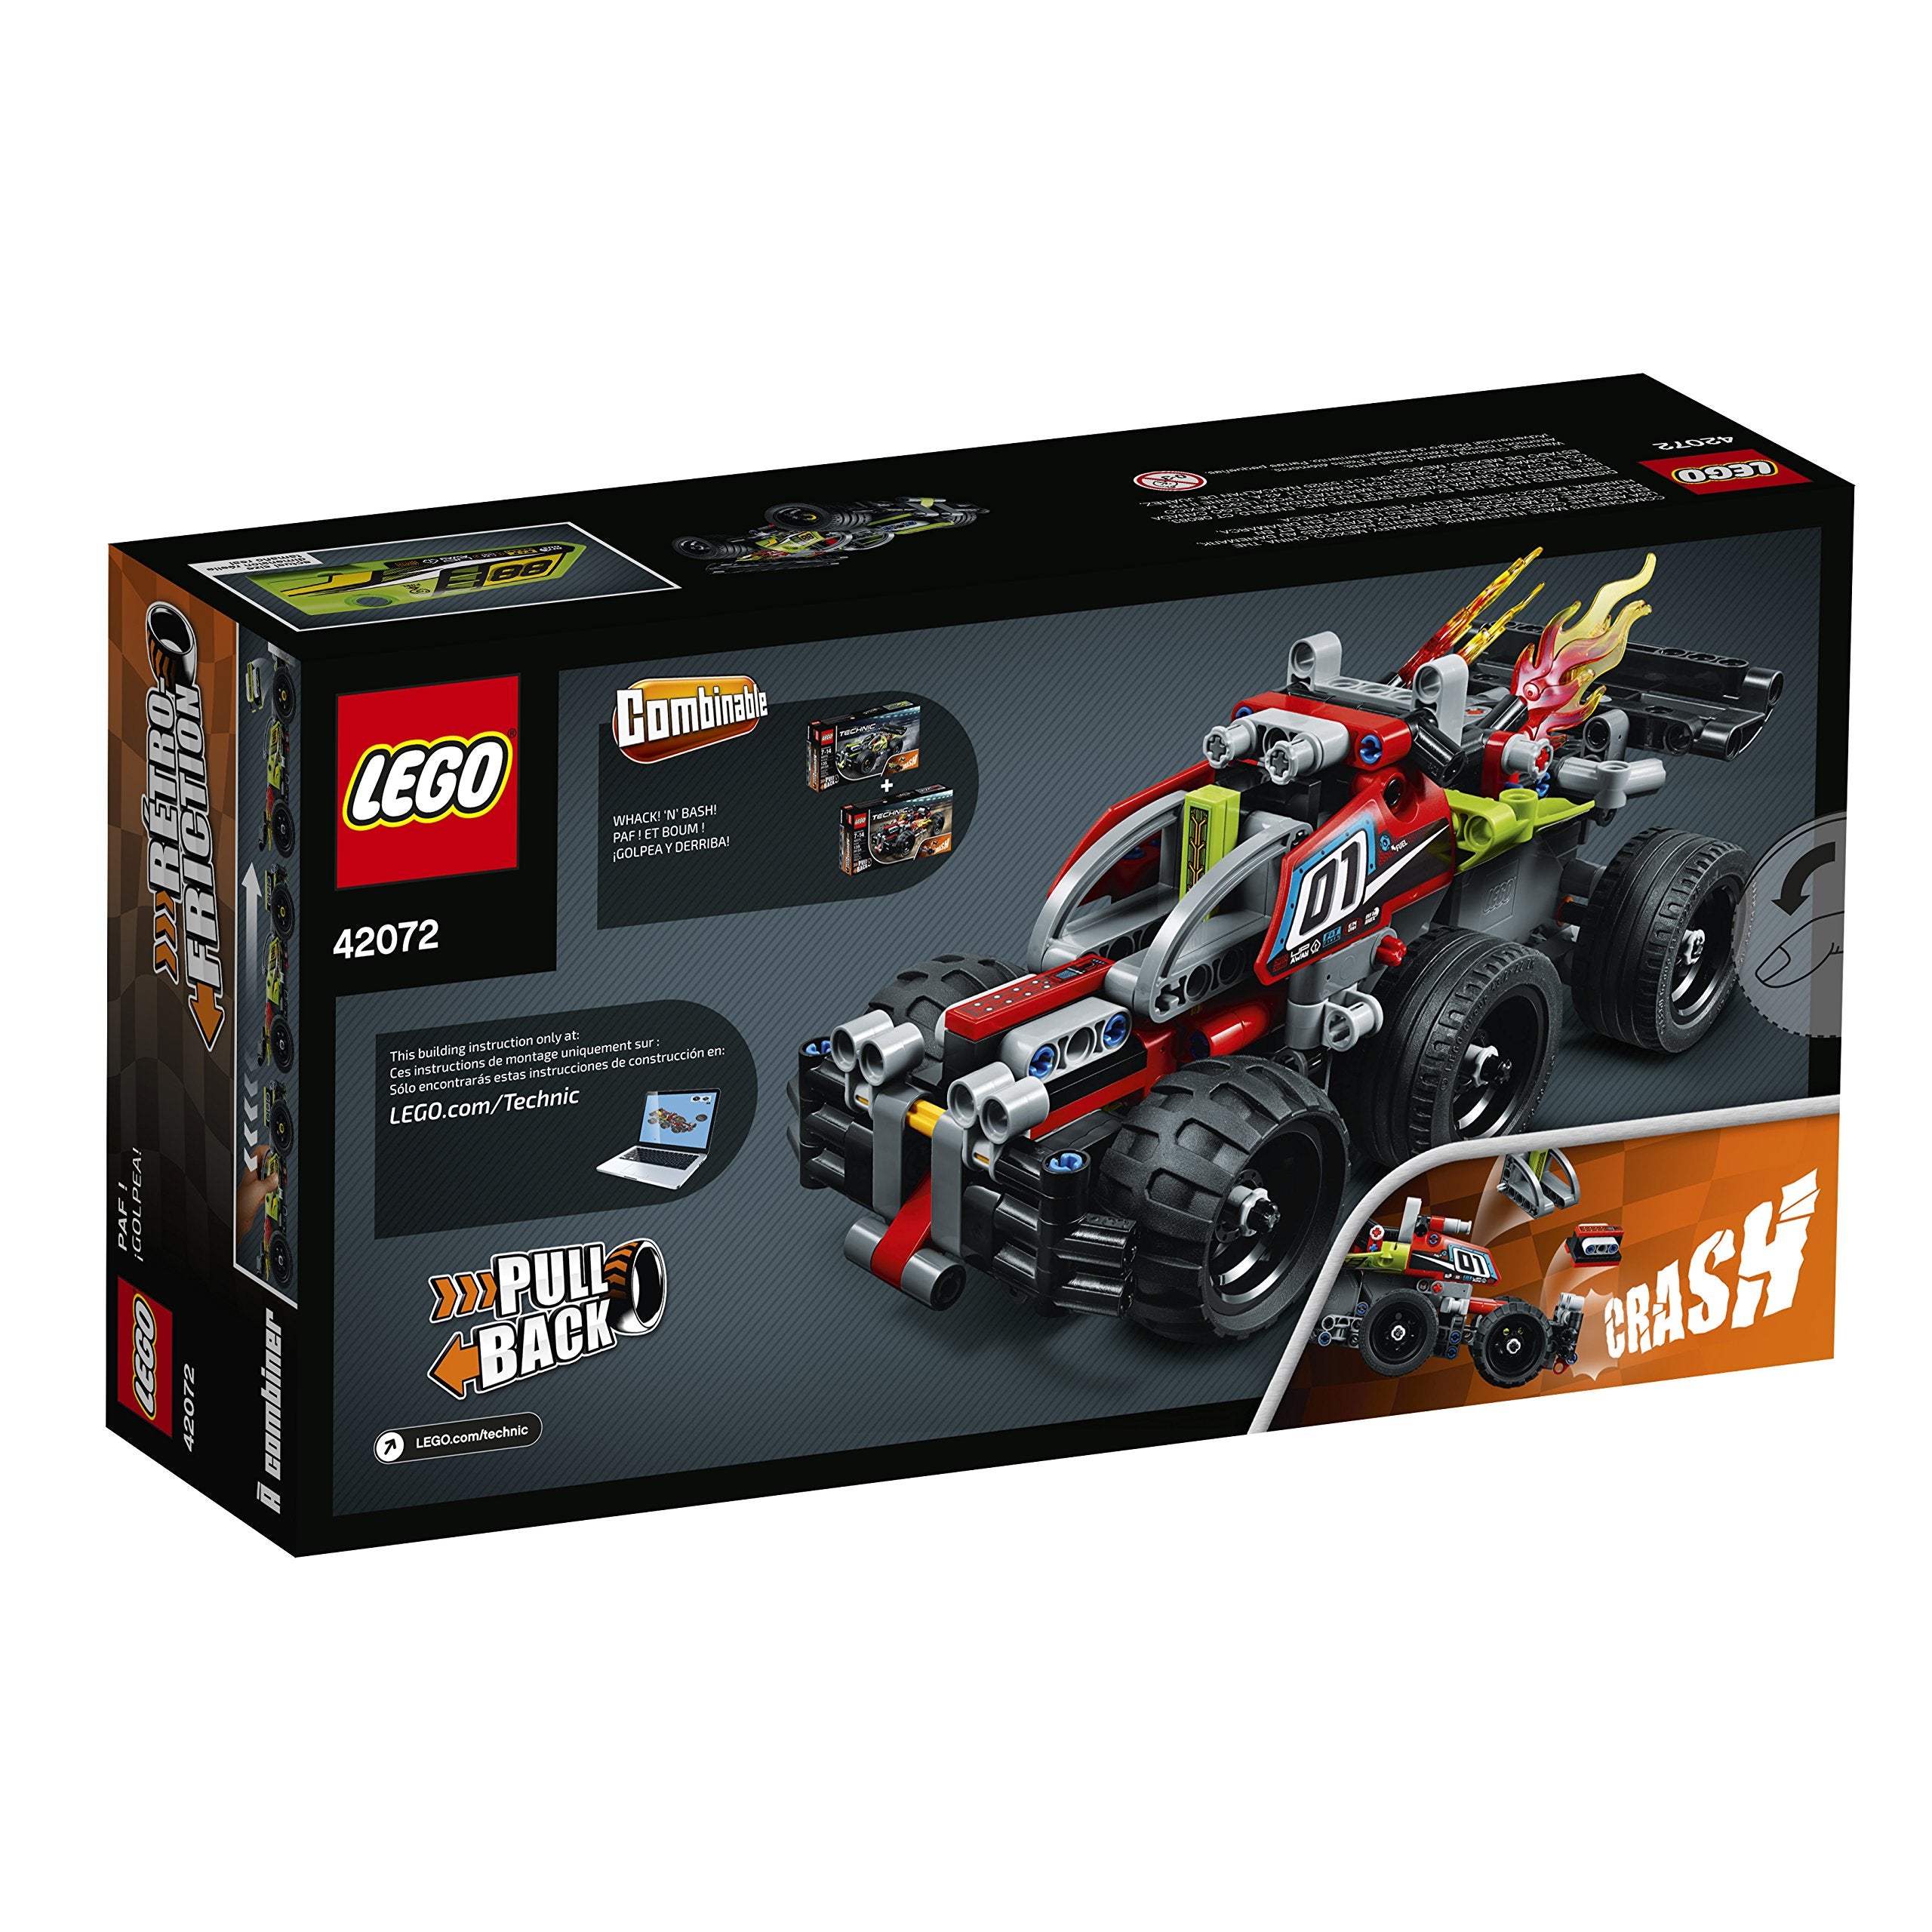 LEGO Technic WHACK! 42072 Building Kit (135 Pieces)